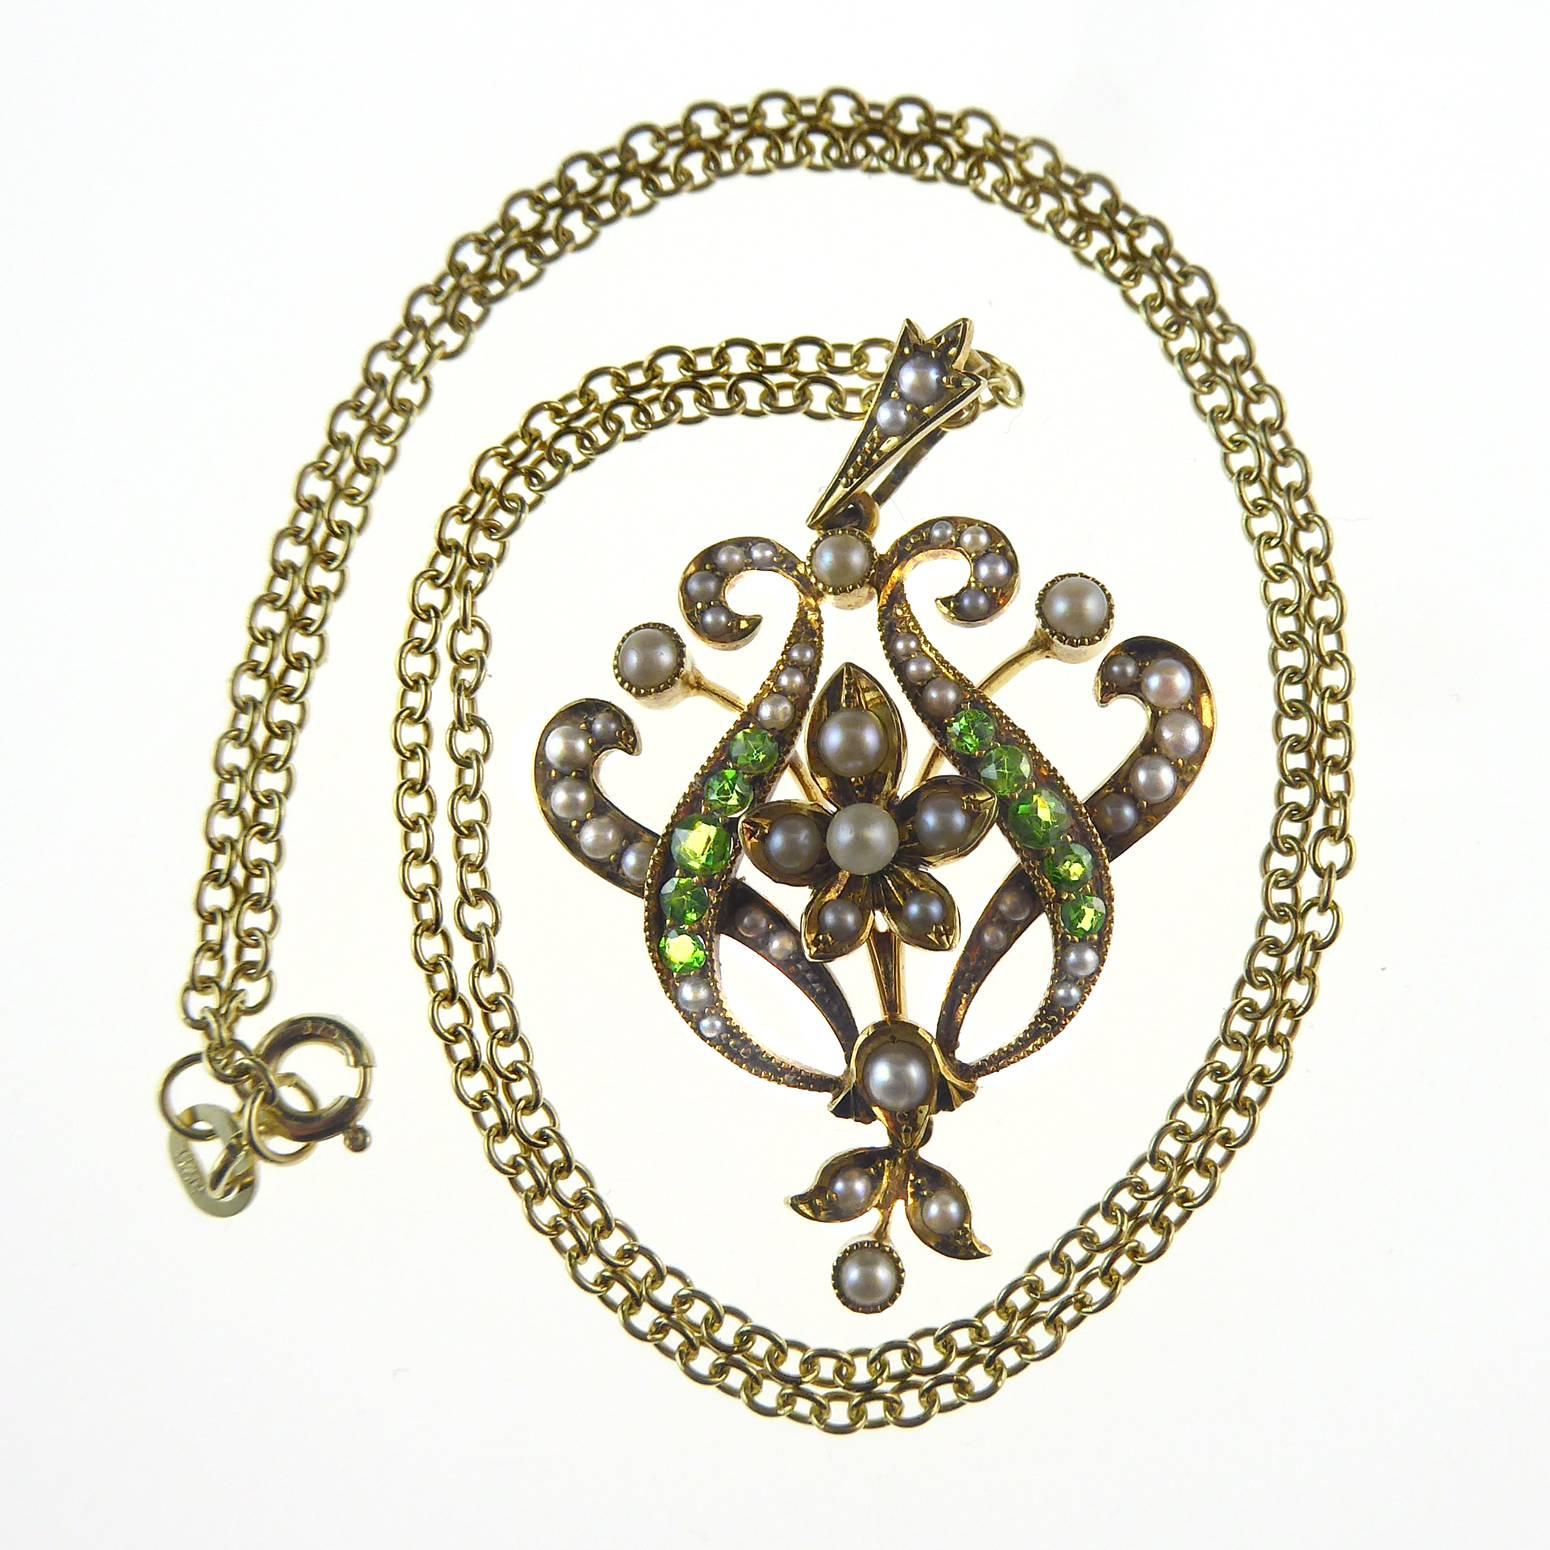 Round Cut Antique Art Nouveau Pendant, 15 Carat Gold with Demantoid Garnet and Seed Pearls